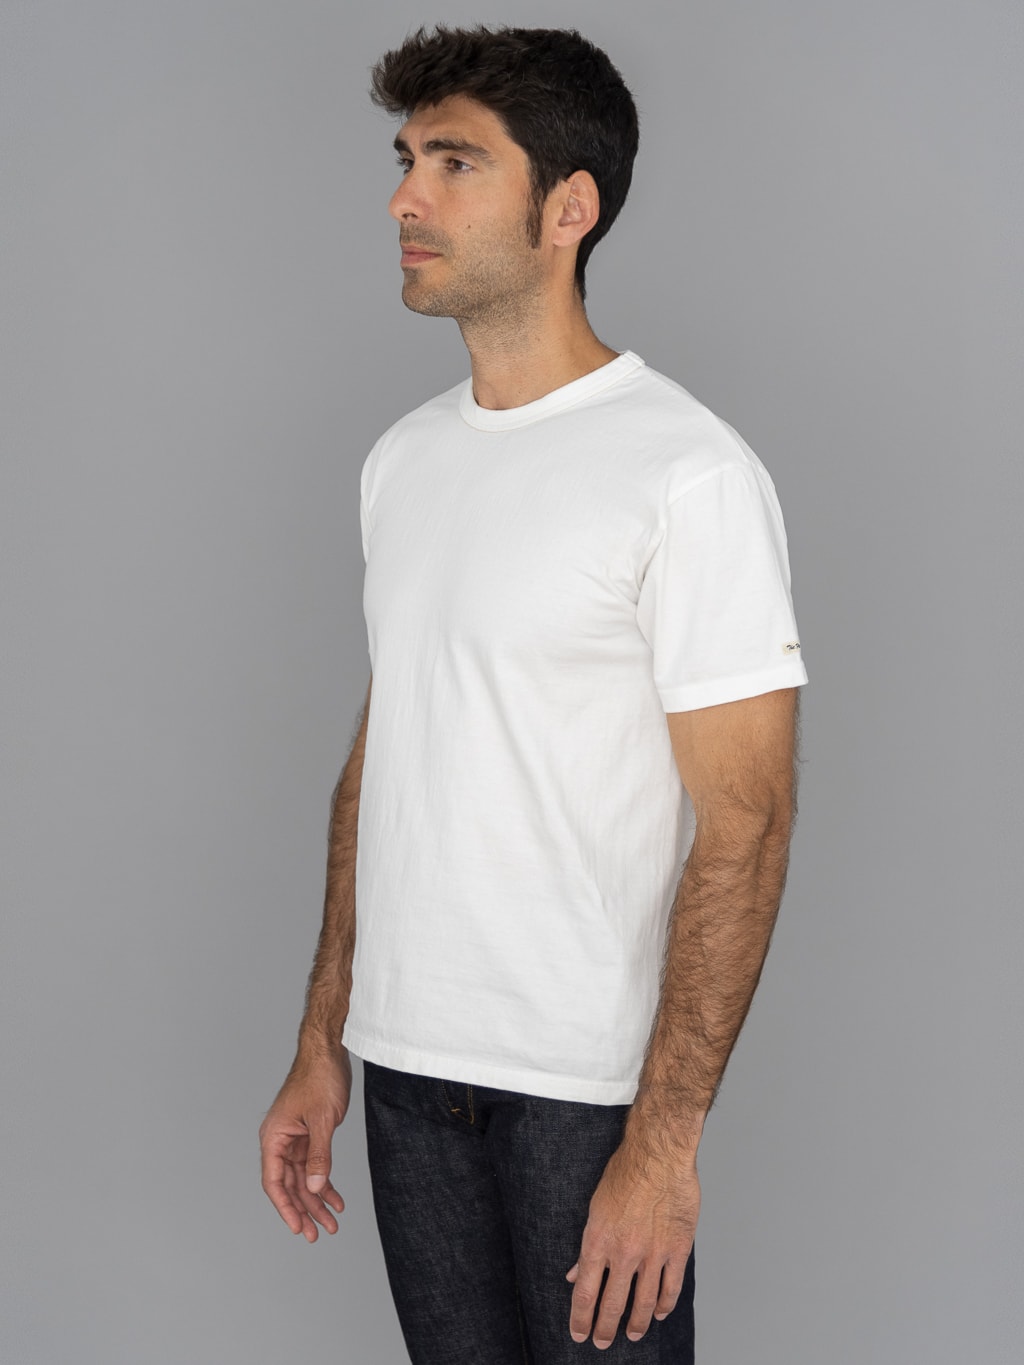 The Flat Head Loopwheeled Heavyweight Plain T-Shirt White